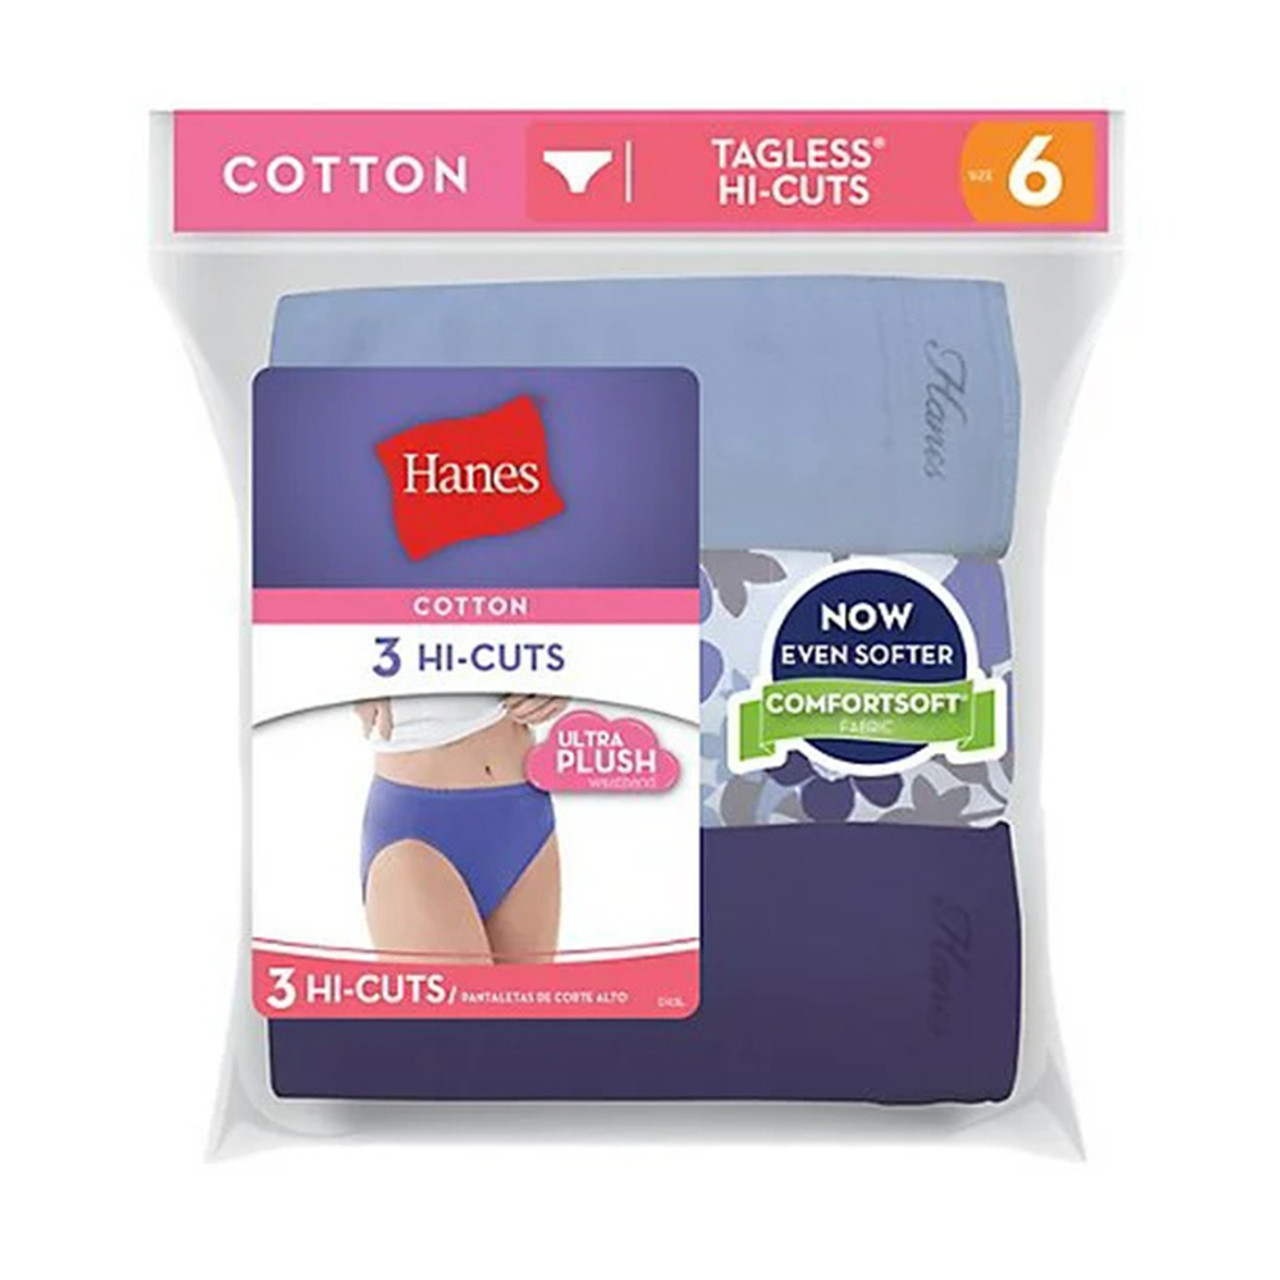 Free: PLUS SIZE Ladies Hanes Underwear Size 10 - Cotton Hi-Cuts